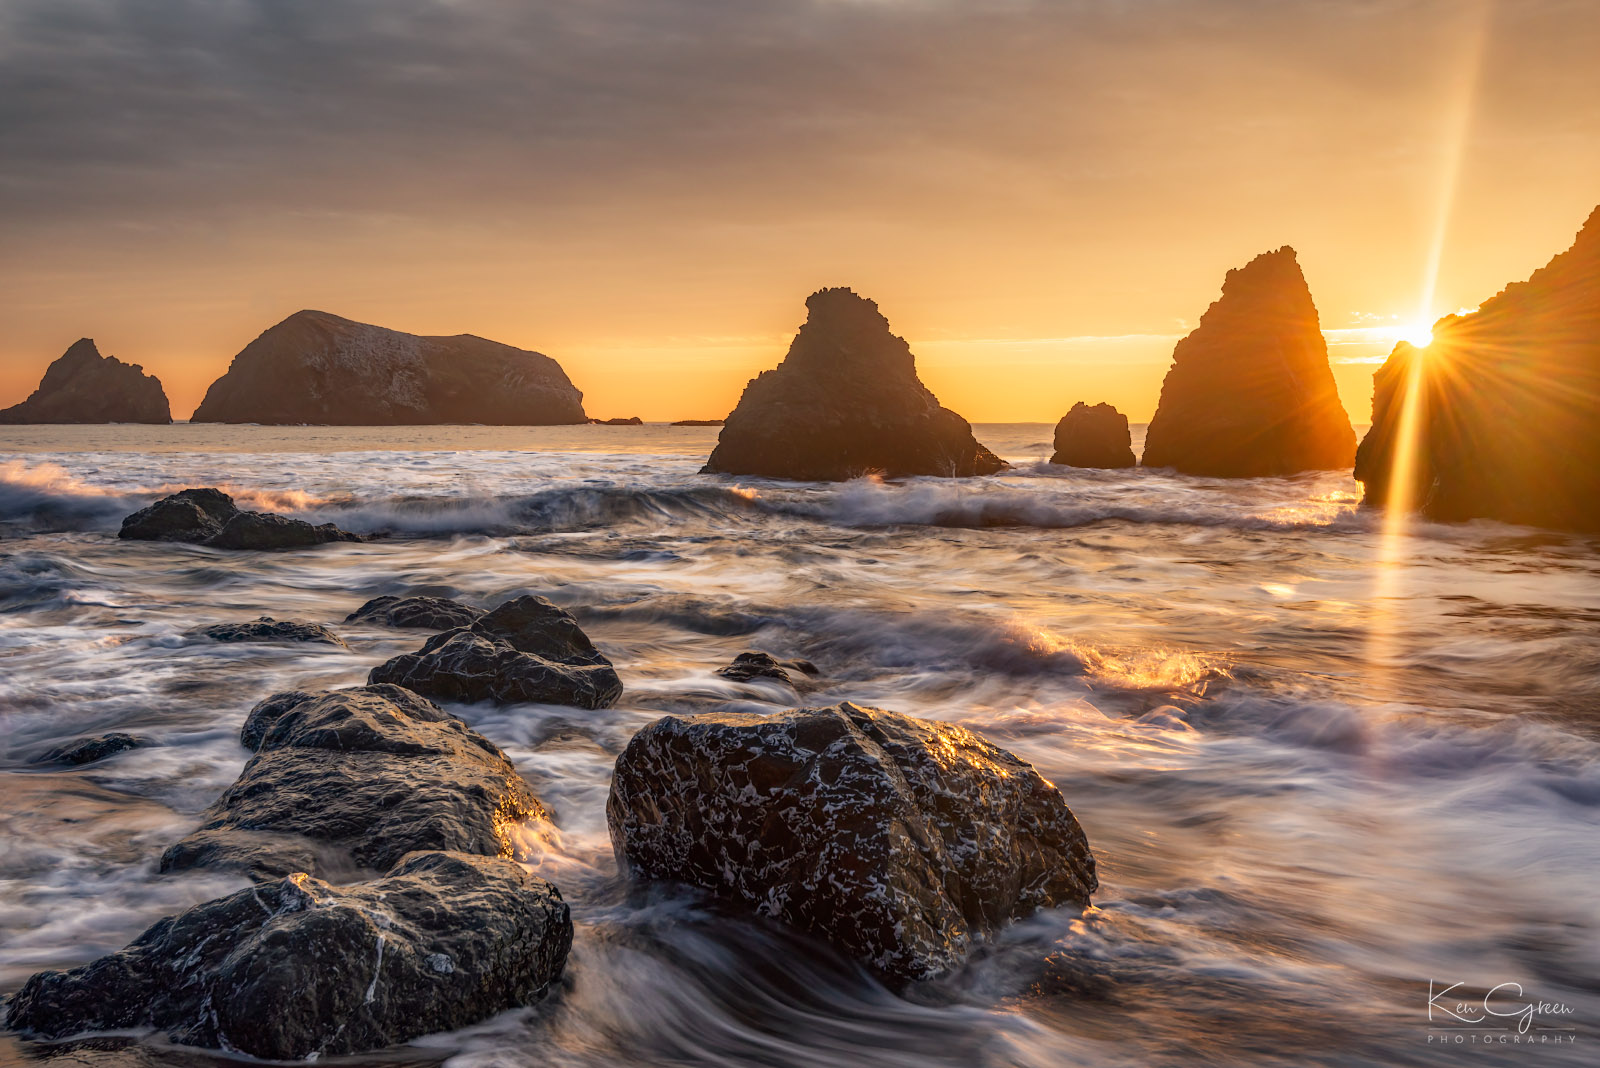 Sea stacks, beach rocks and sunset at Rodeo Beach in Sausalito, California.